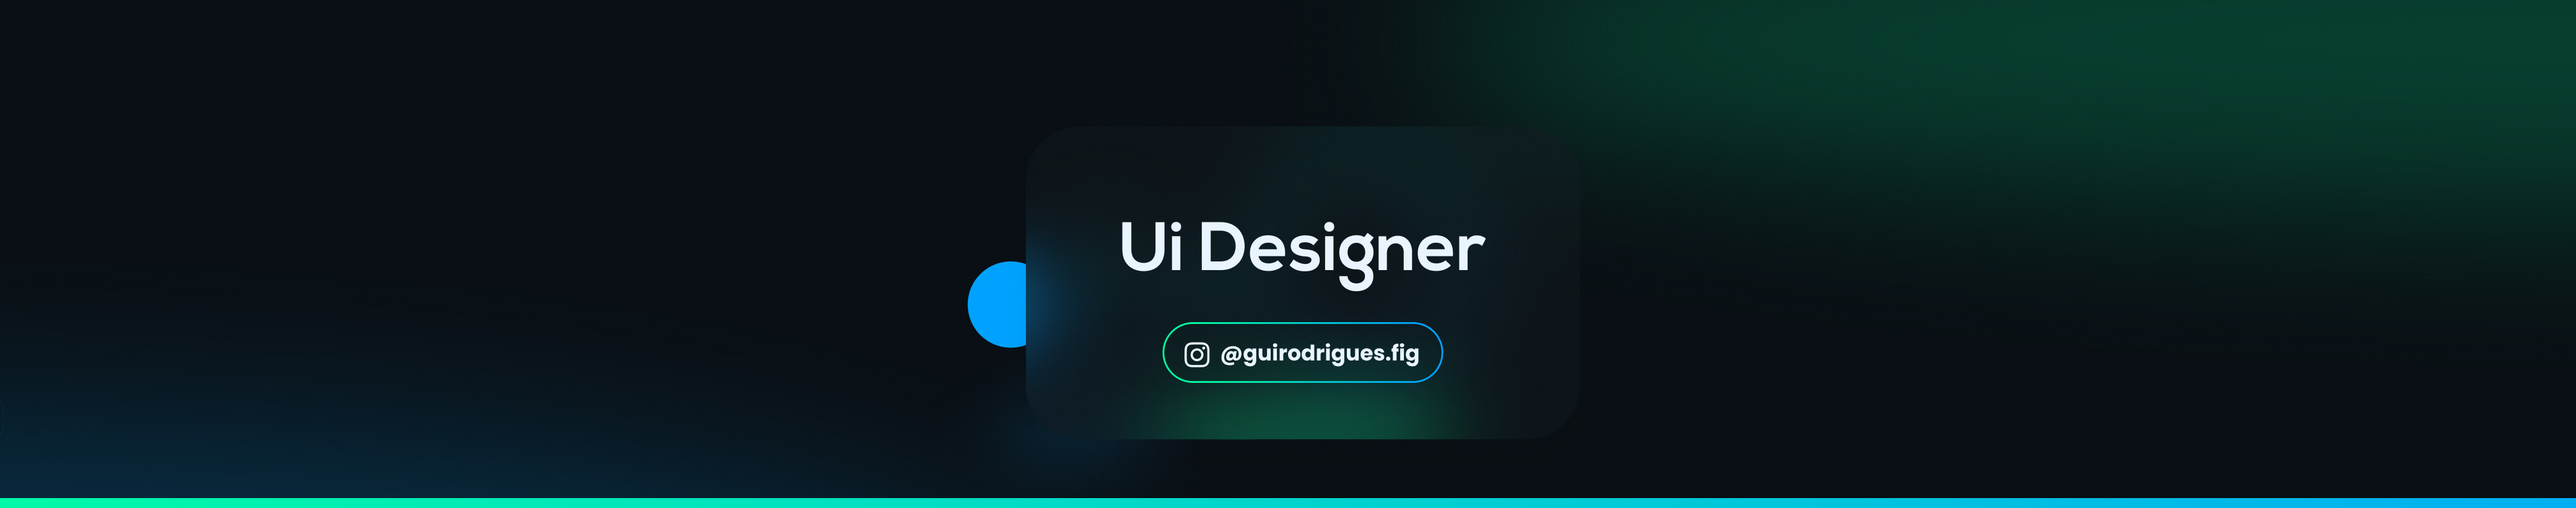 Profil-Banner von Guilherme Rodrigues